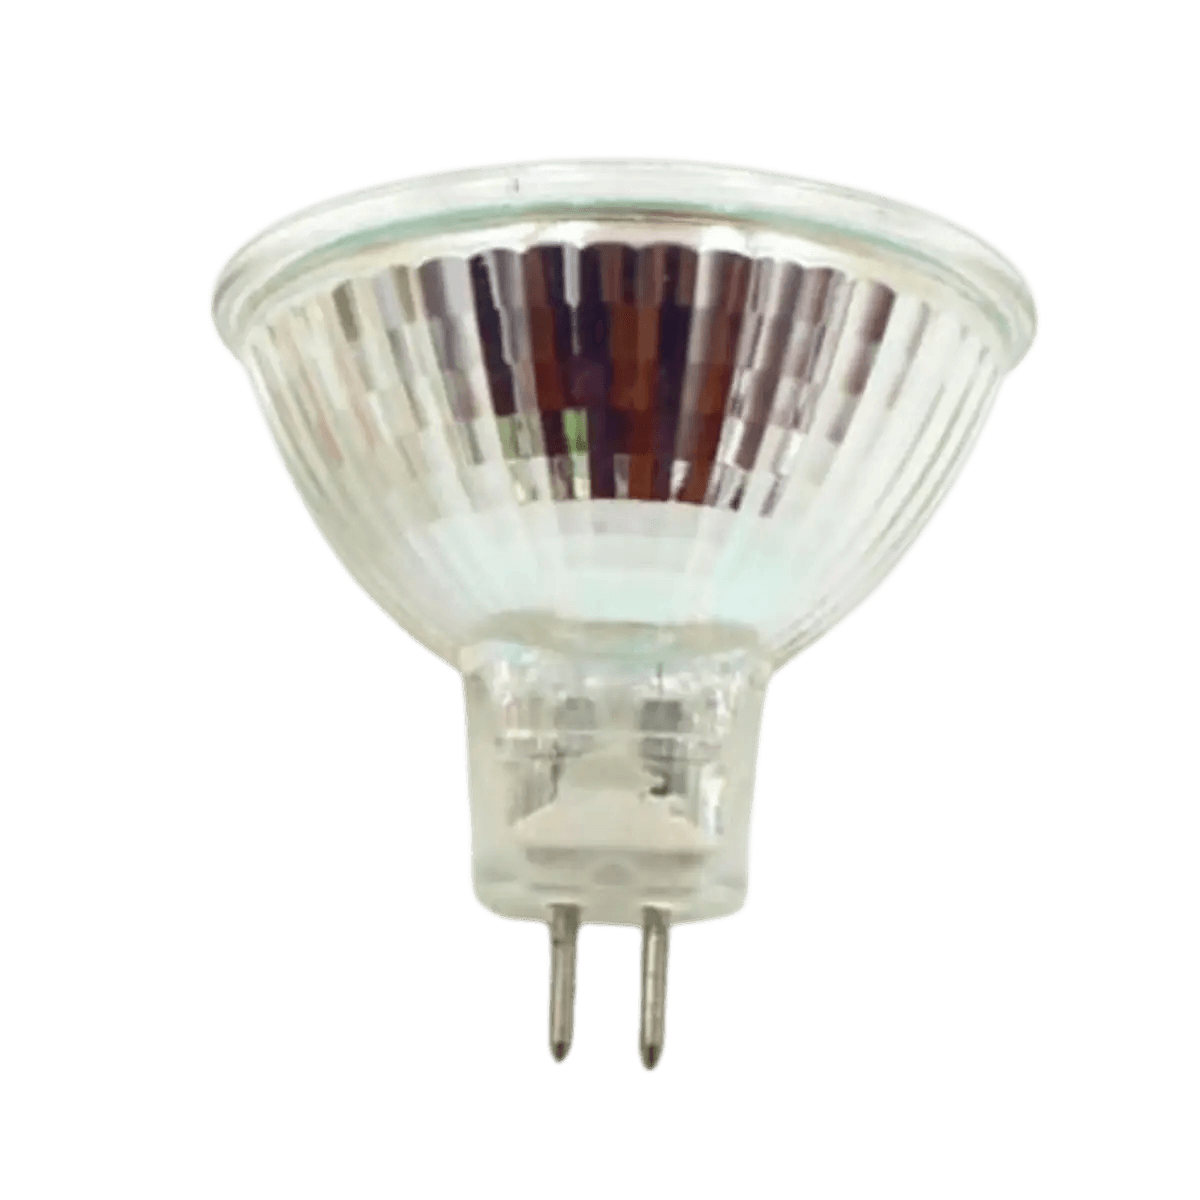 Ampoule Halogene G9 energy Saver 48w 220v (equ. 60w) à Prix Carrefour